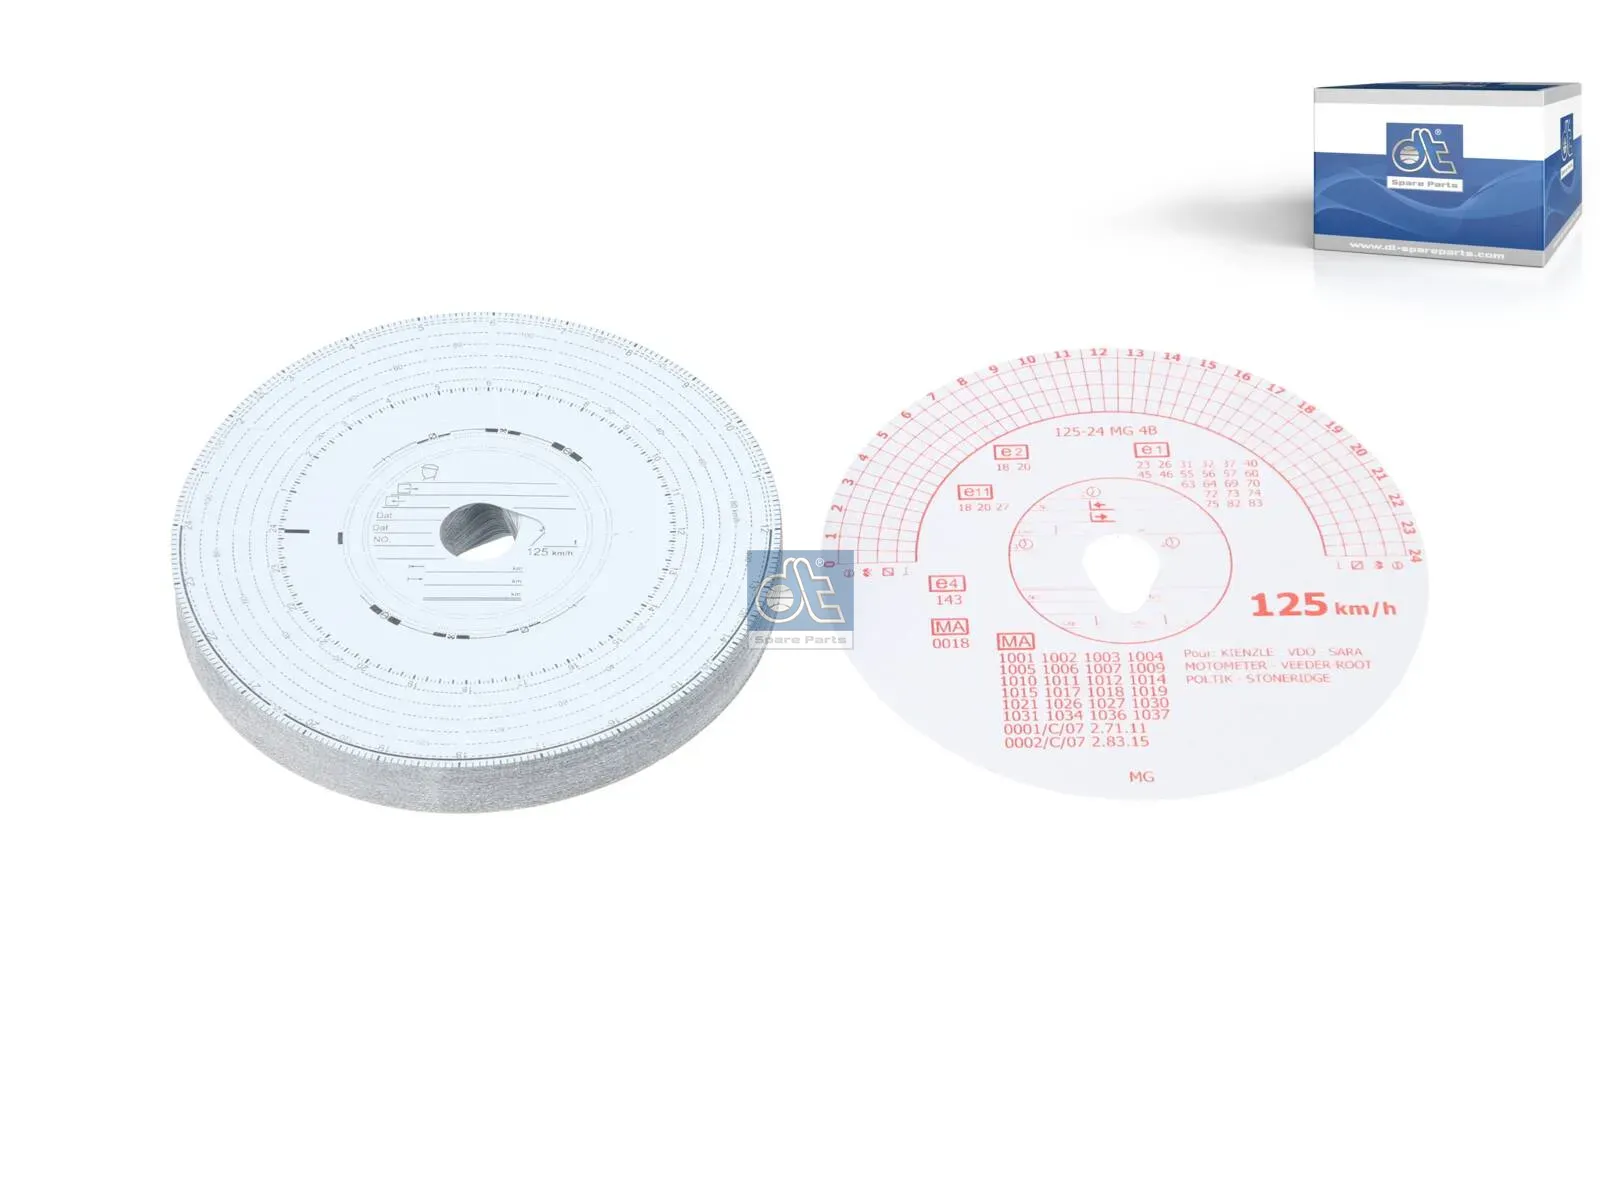 Tachograph disc set, 1 day, 125 km/h